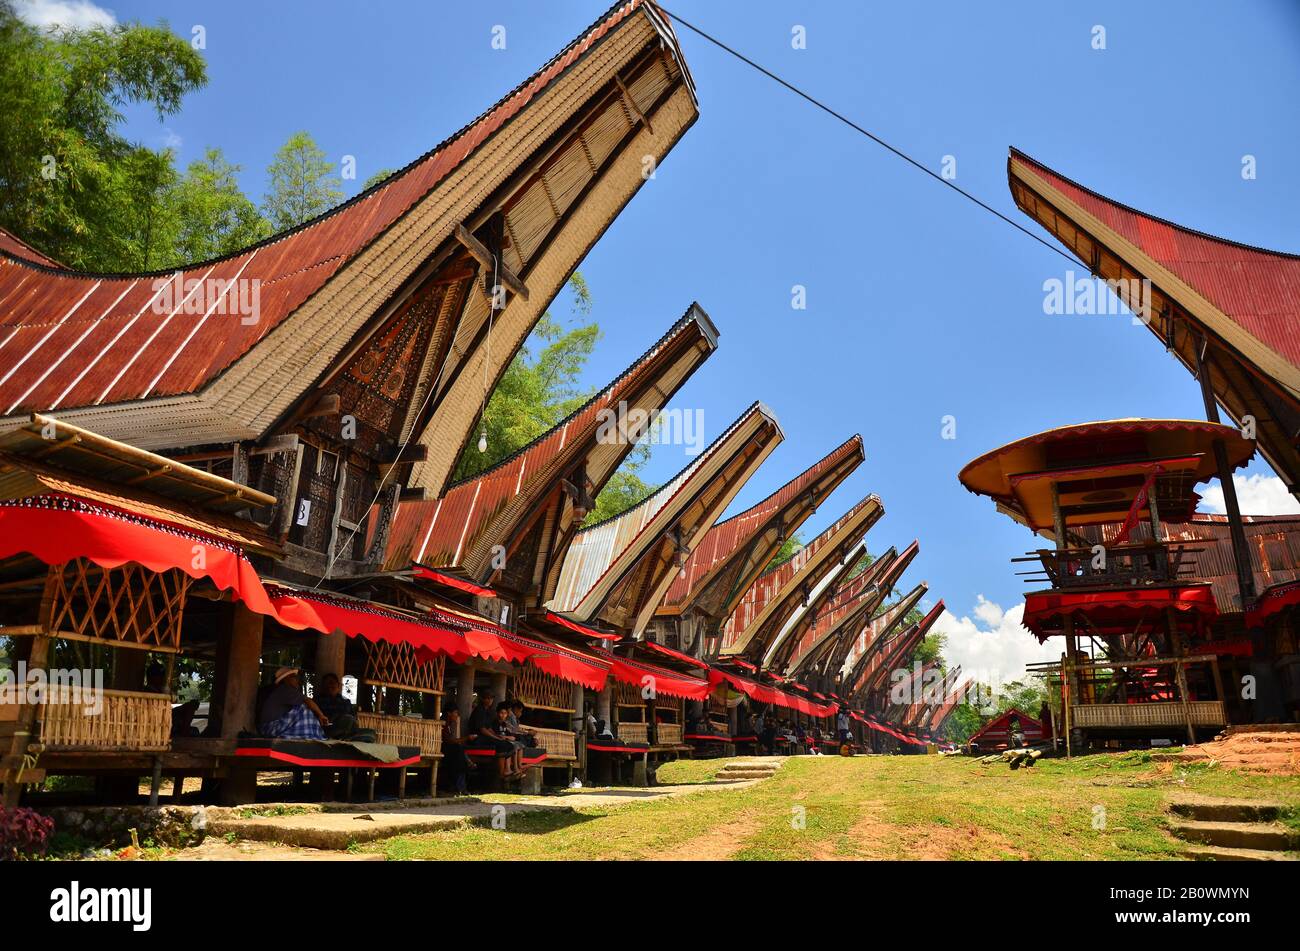 Dorf mit dekorierten traditionellen Tongkonan-Ahnenhäusern, Rantepao, Toraja-Hochland, Tana Toraja, Sulawesi, Indonesien, Südostasien Stockfoto